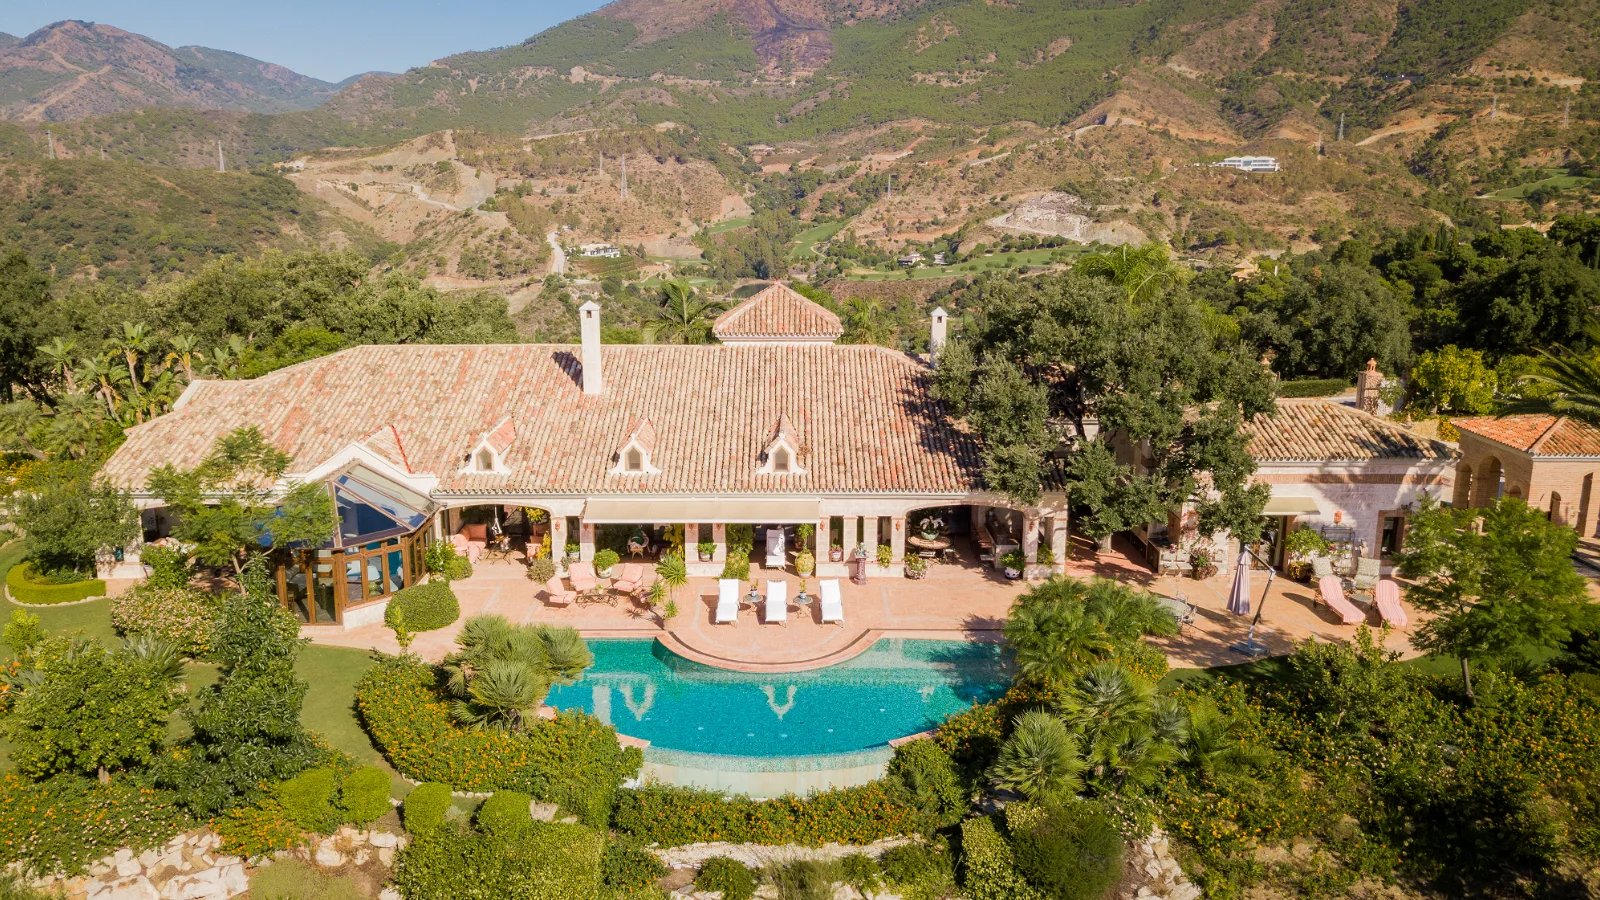 Villa Baylon Accommodation in Marbella